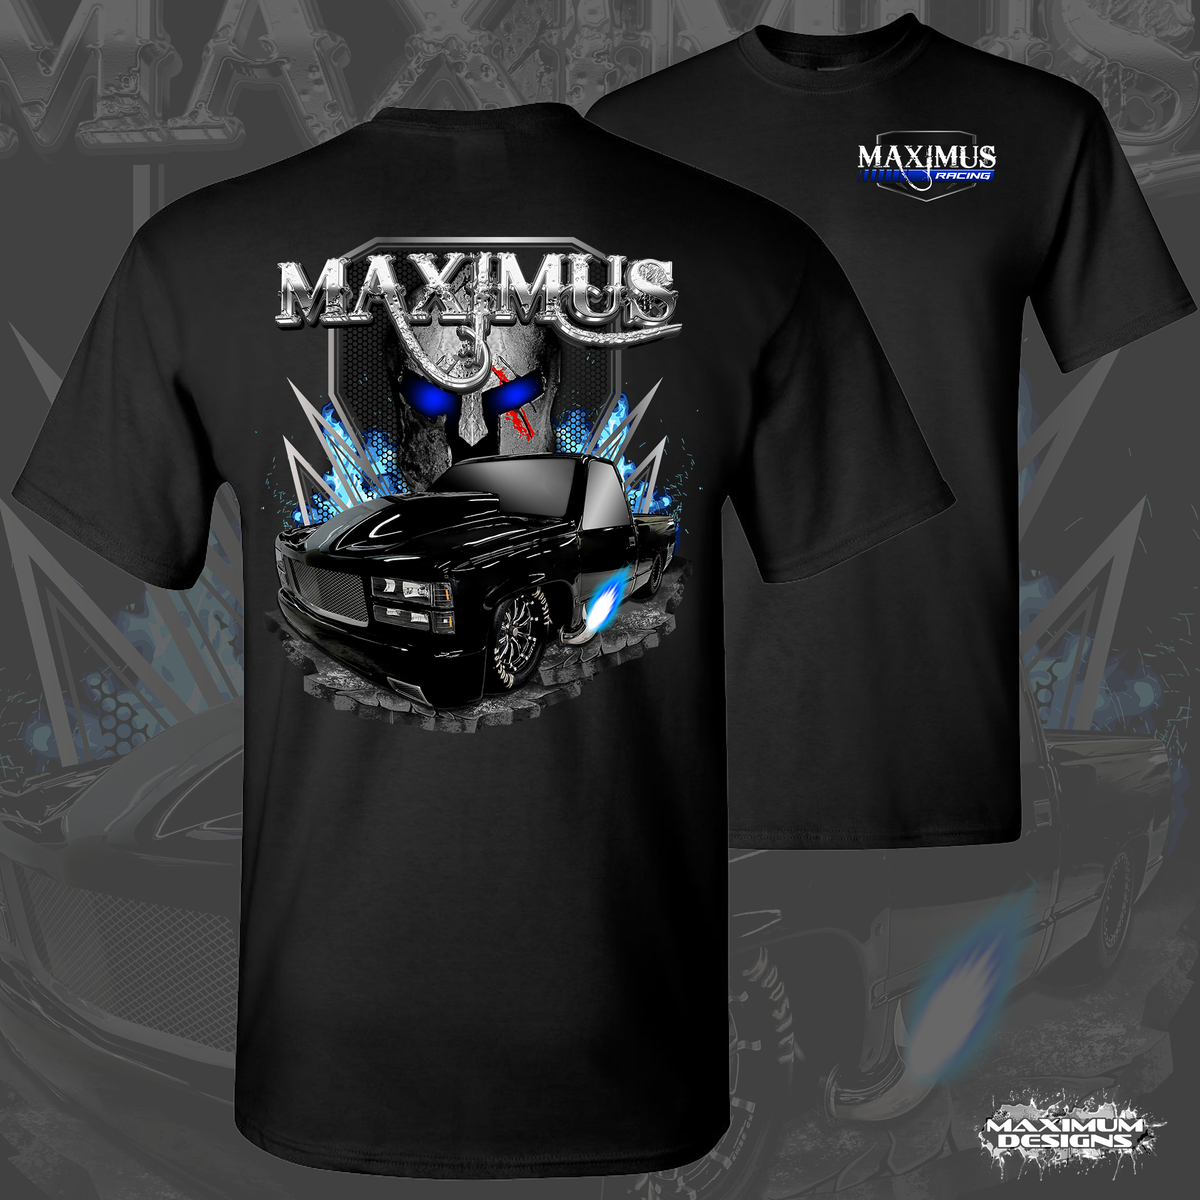 The – Maximum Racing MAXIMUS\